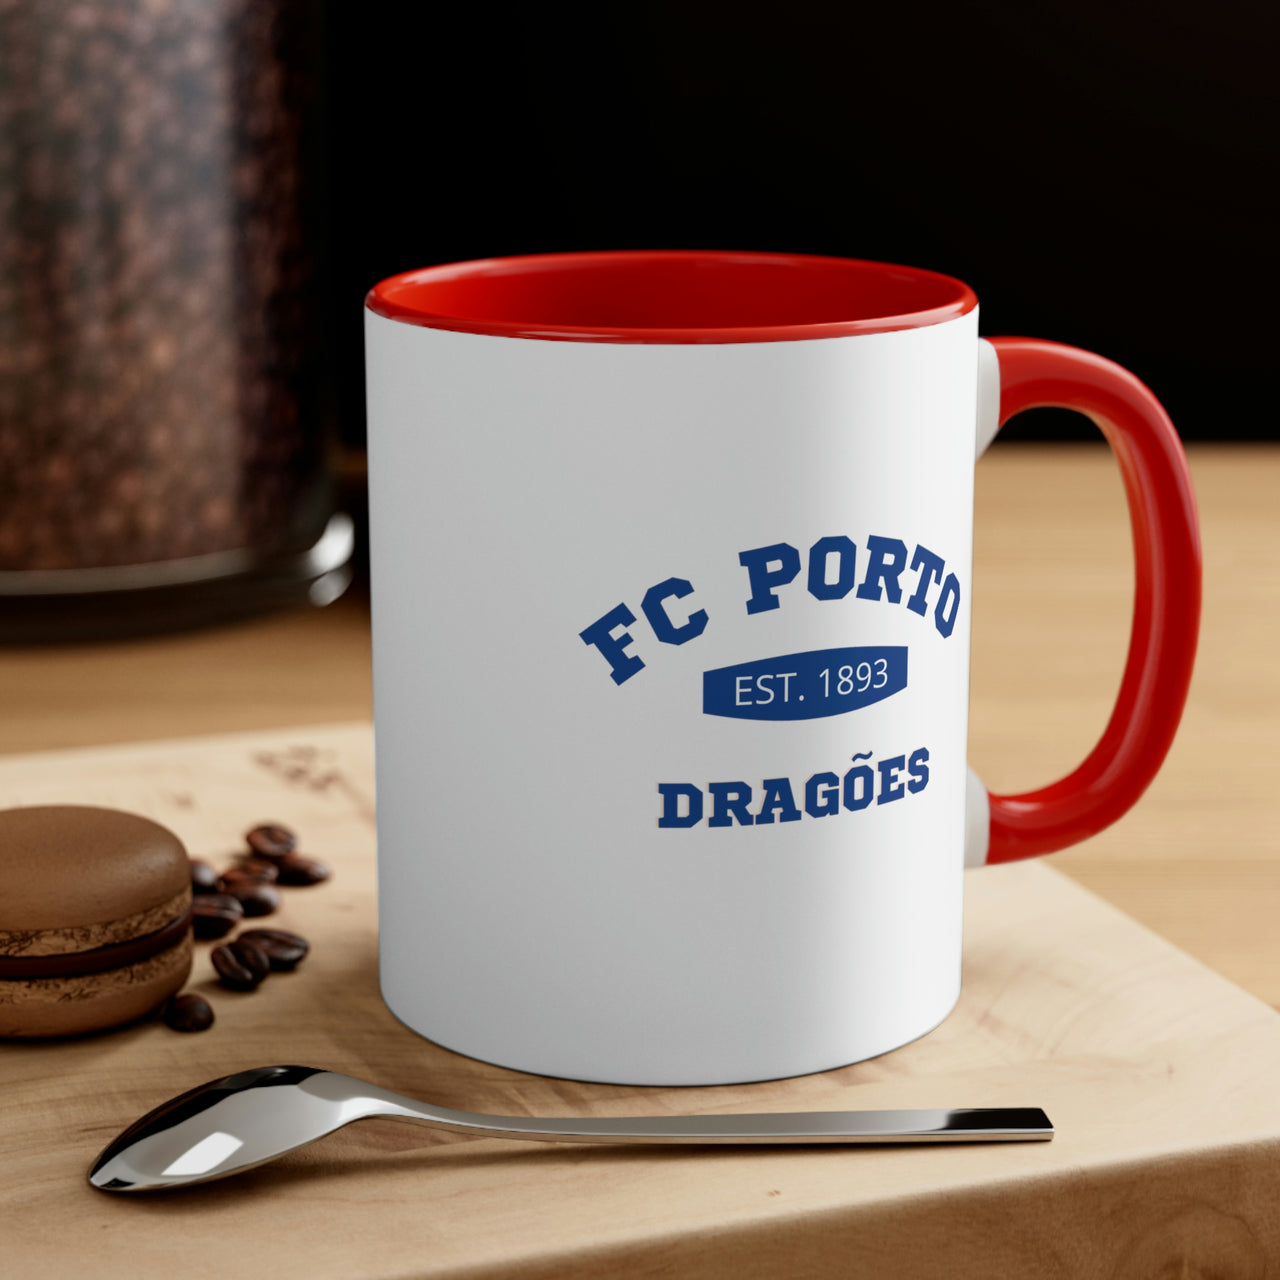 Porto Coffee Mug, 11oz